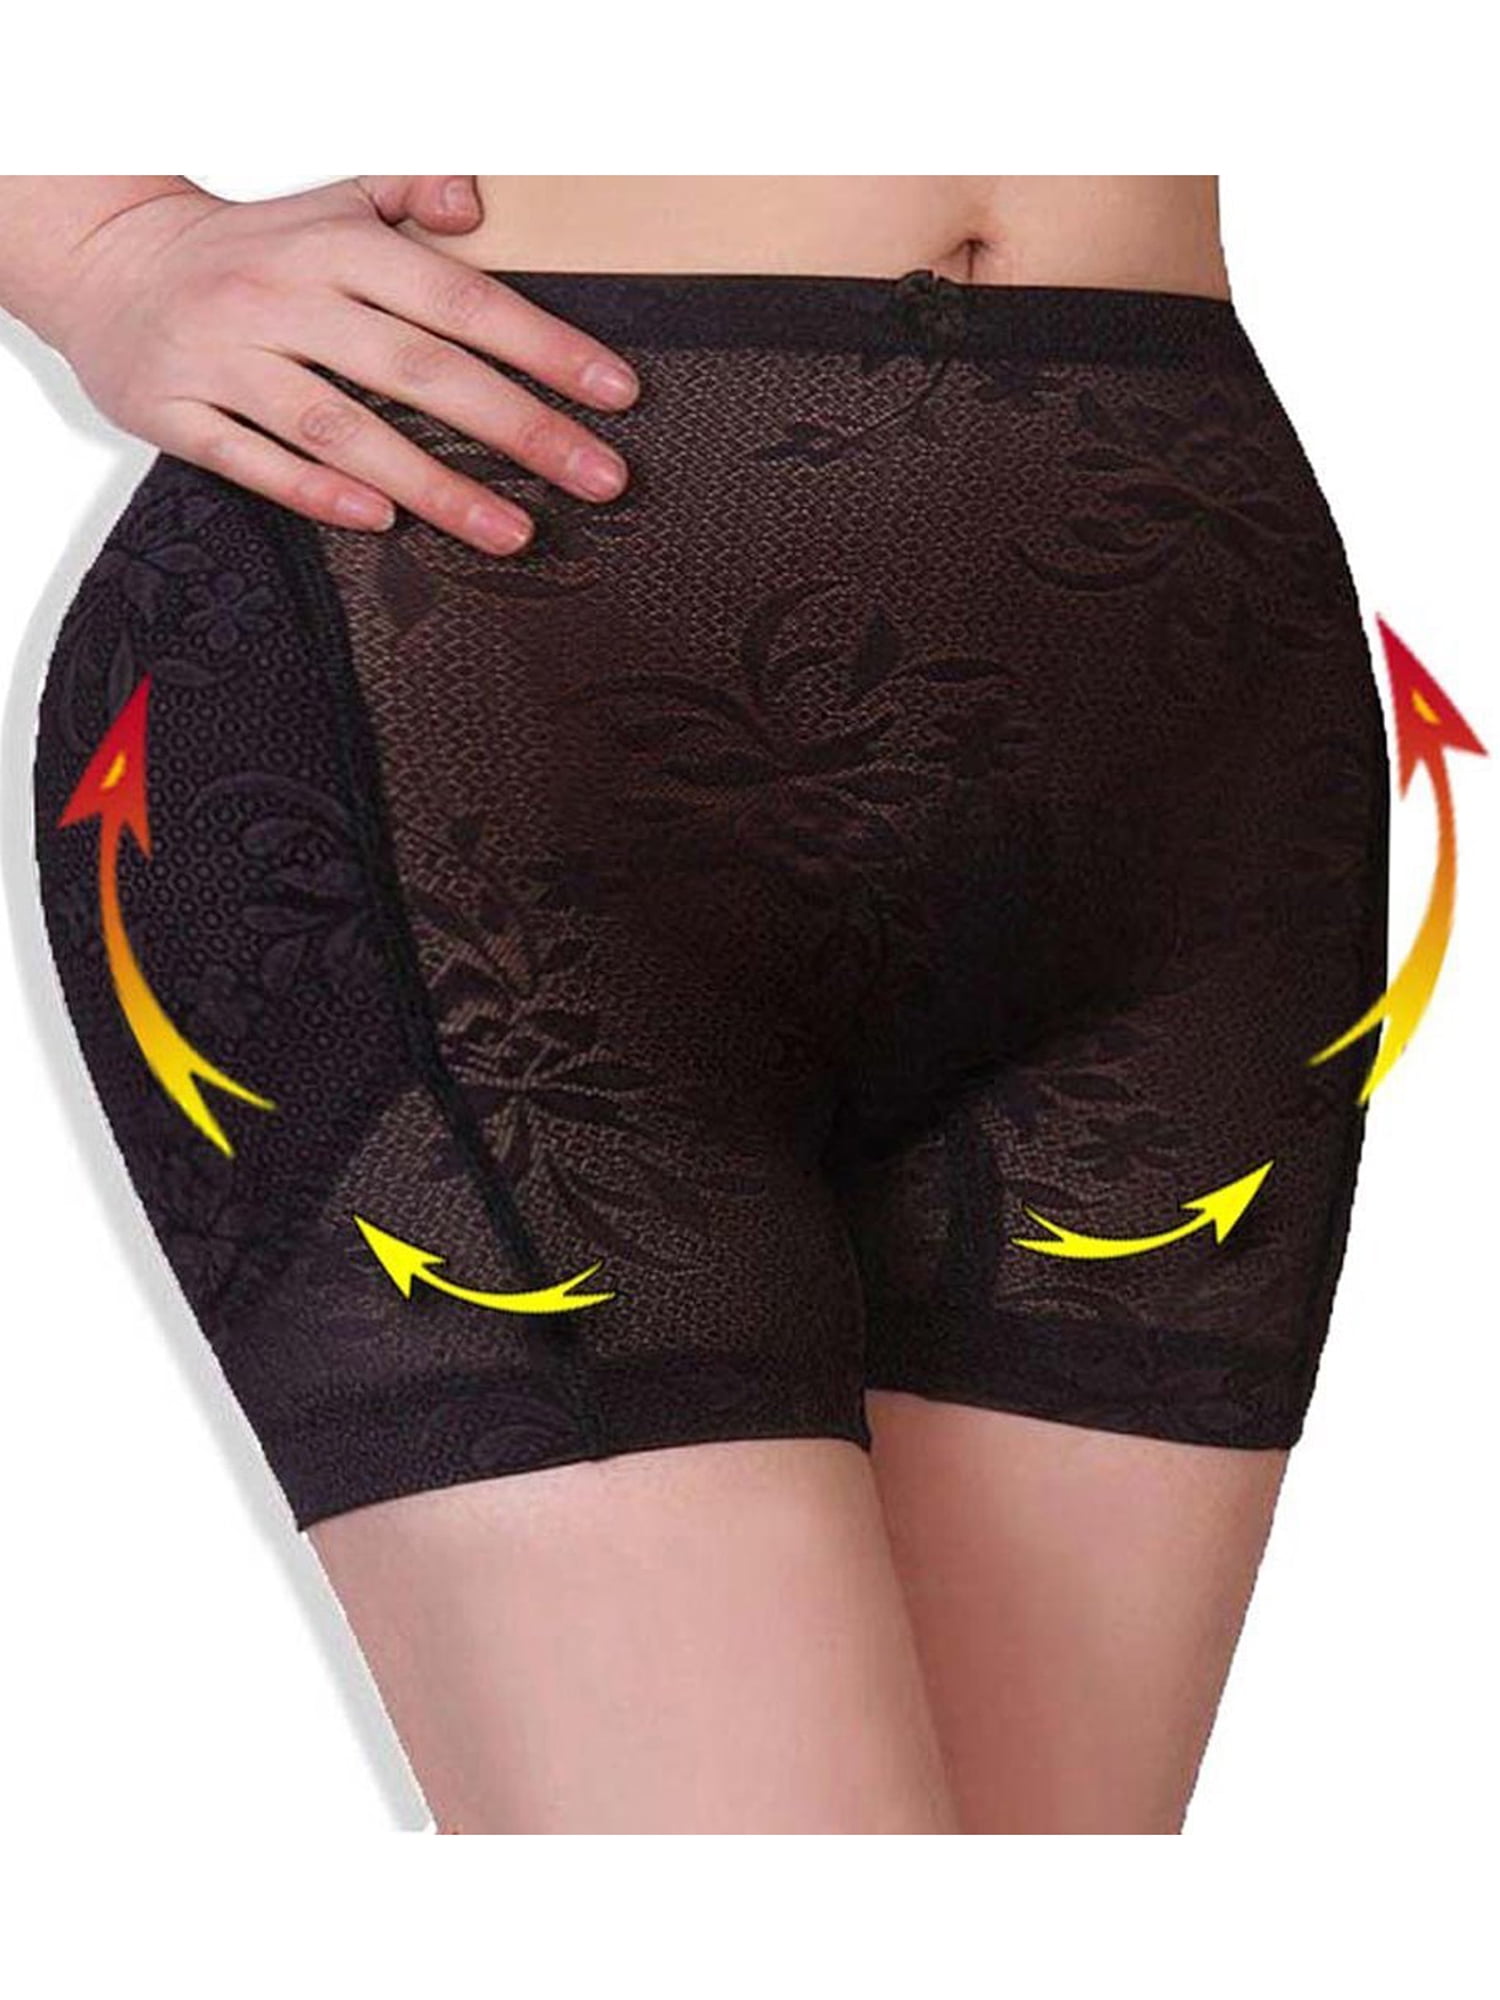 SAYFUT Women's Seamless Control Panties Shapewear Butt Lifter Padded Panty  Enhancing Body Shaper Shaping Boyshorts 